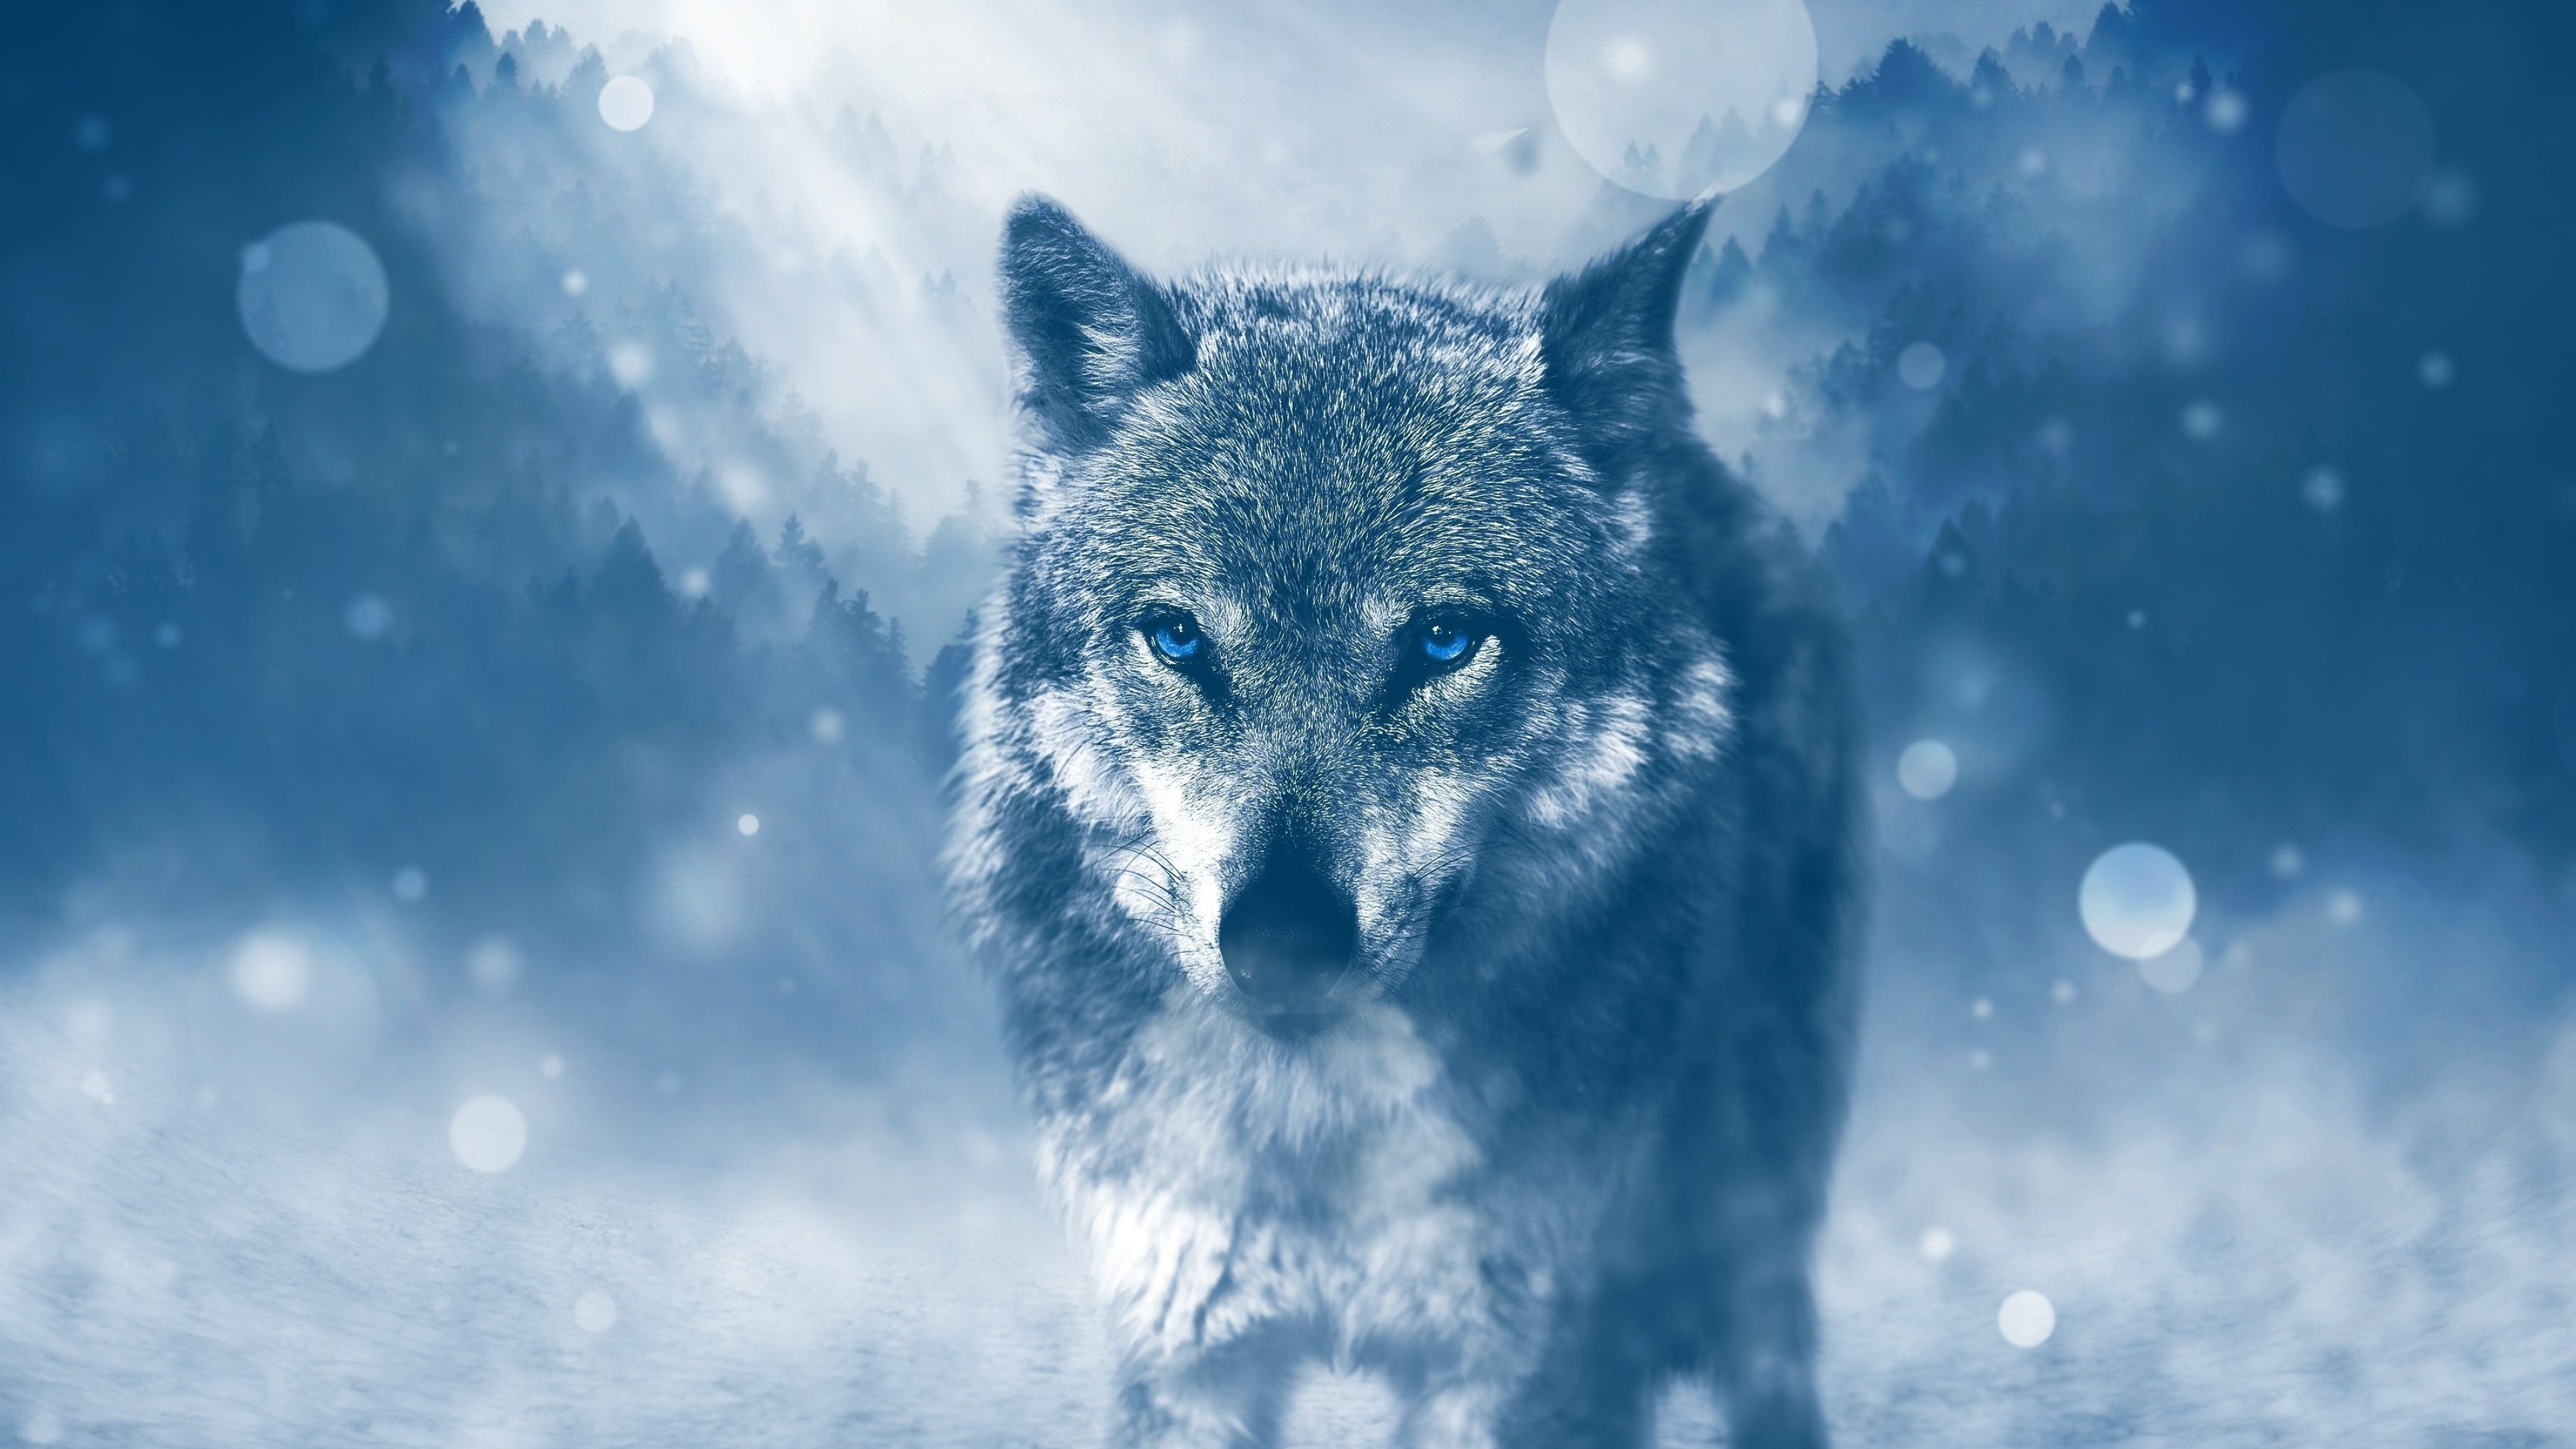 Ice Wolf, Stunning wolf wallpapers, Majestic animals, Nature's beauty, 3840x2160 4K Desktop